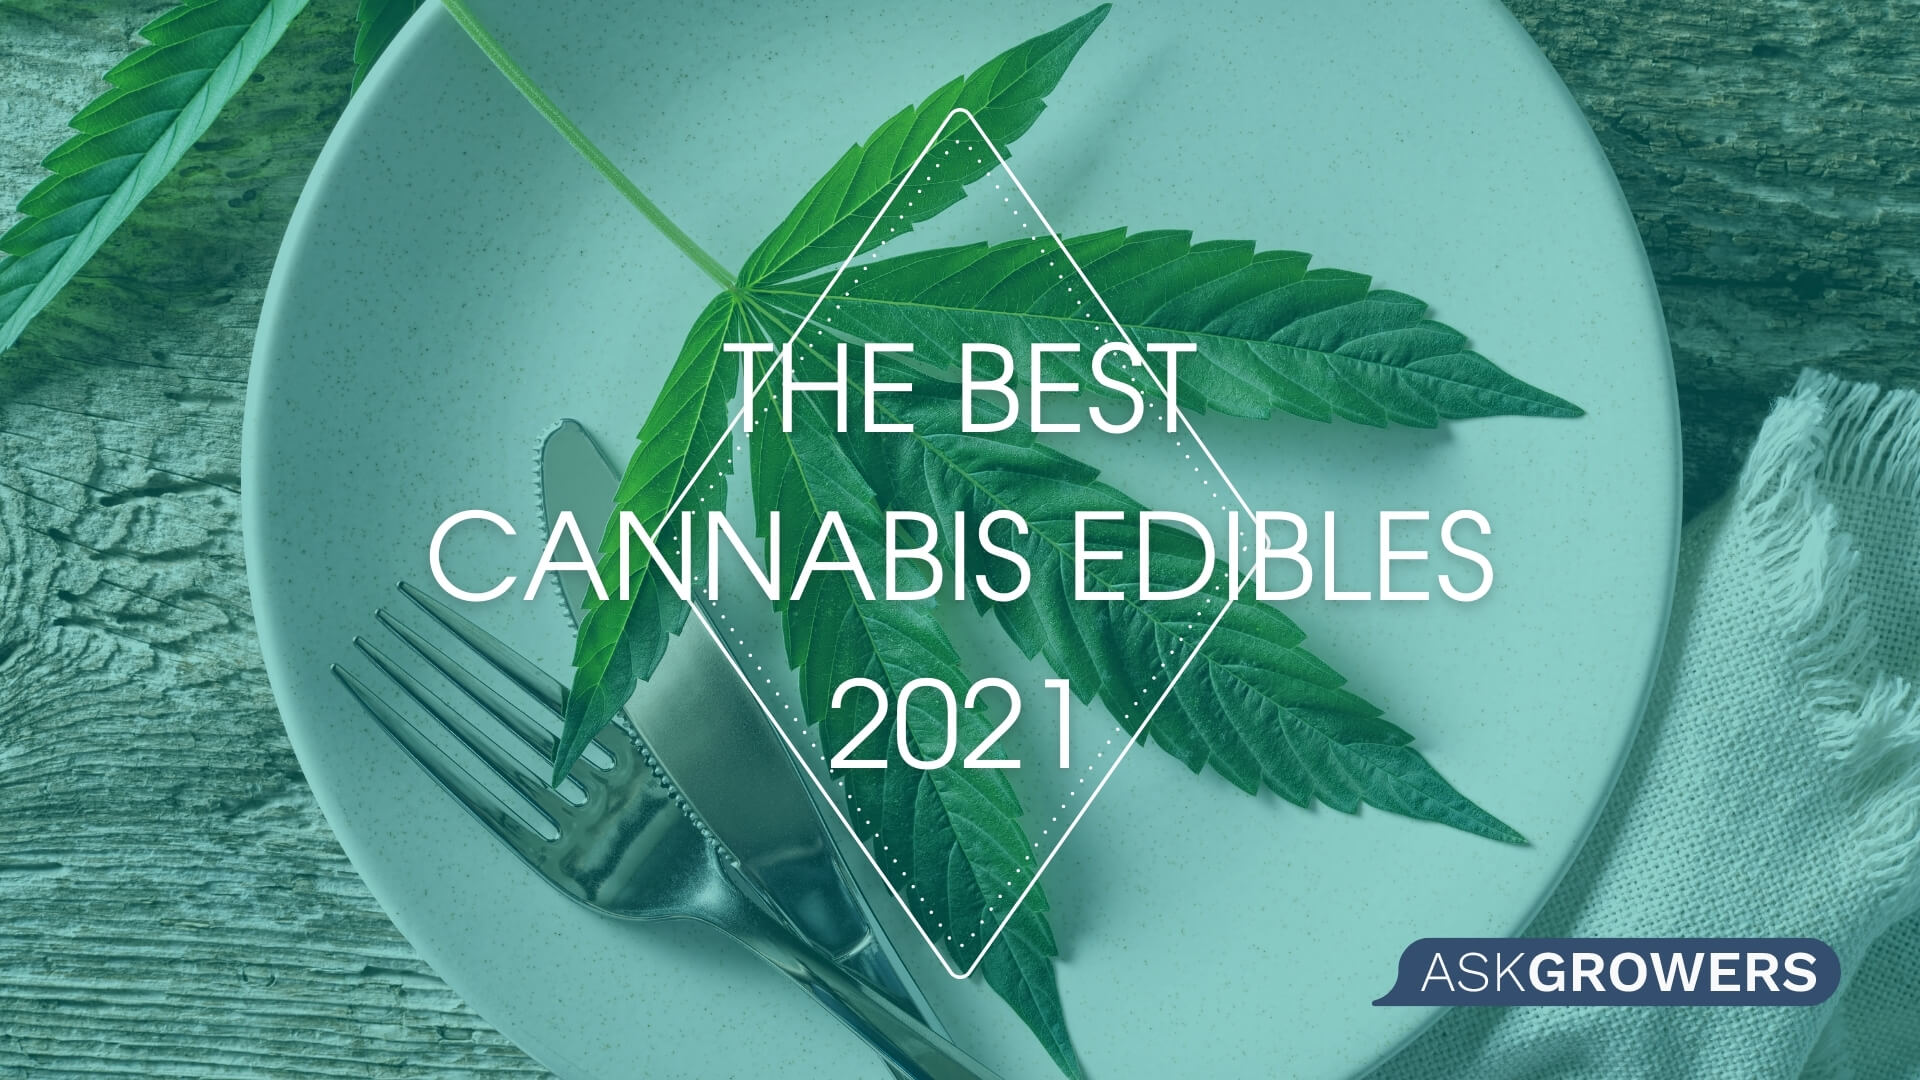 The Best Cannabis Edibles 2021